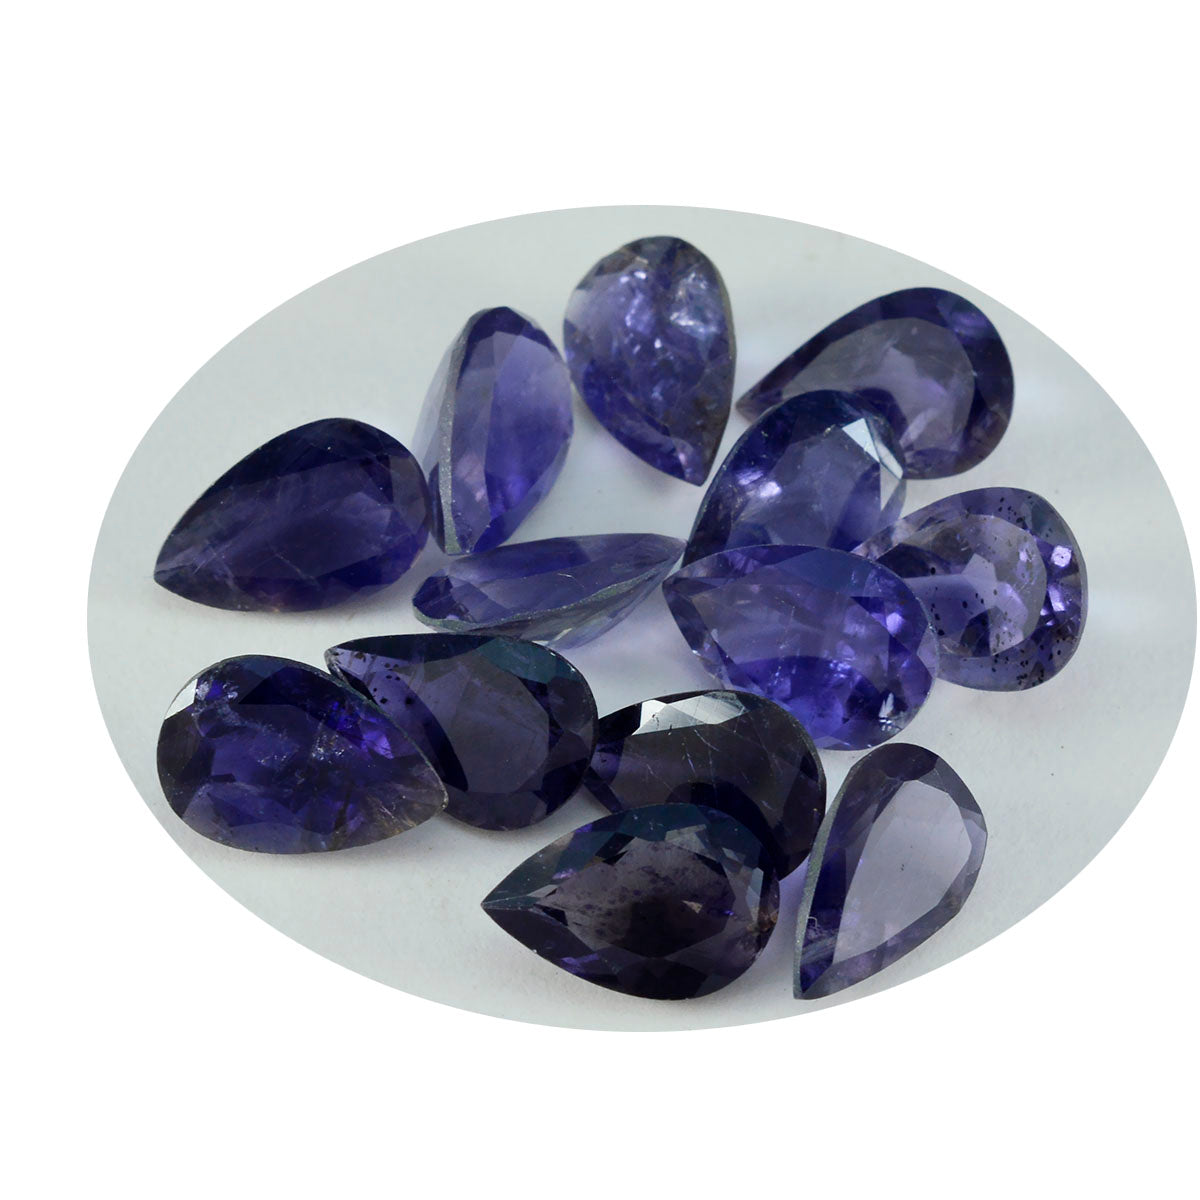 Riyogems 1PC Blue Iolite Faceted 7x10 mm Pear Shape pretty Quality Loose Gems